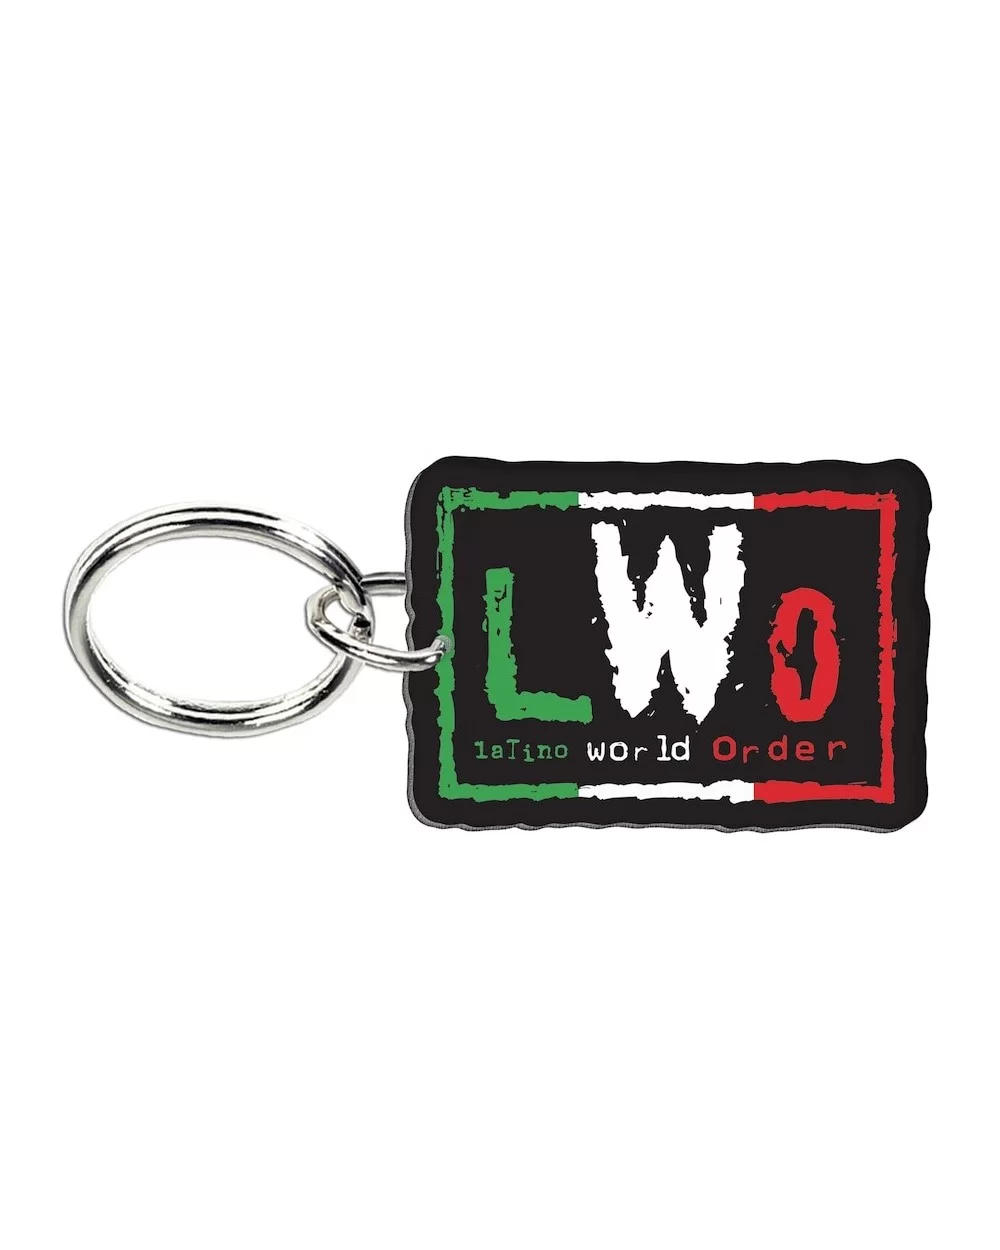 LWO Key Ring $2.73 Accessories